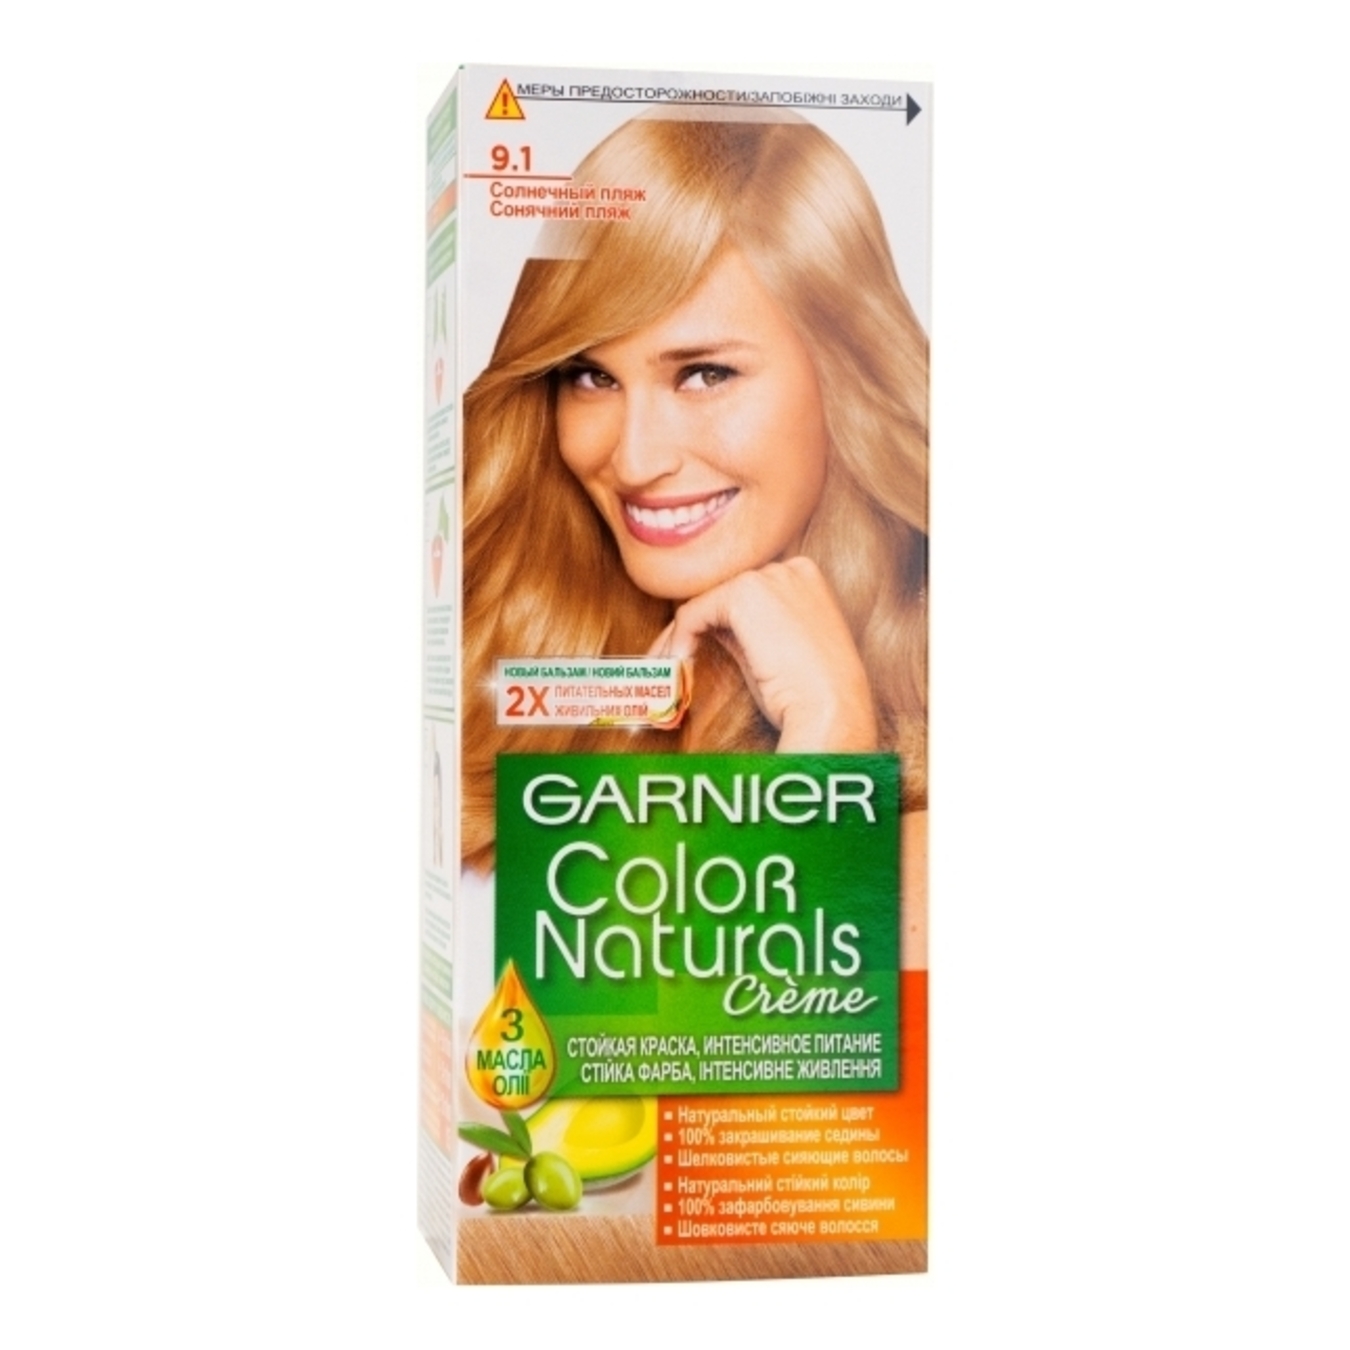 Garnier Color Naturals Creme With 3 Oils 9.1 Sunny Beach Hair Dye